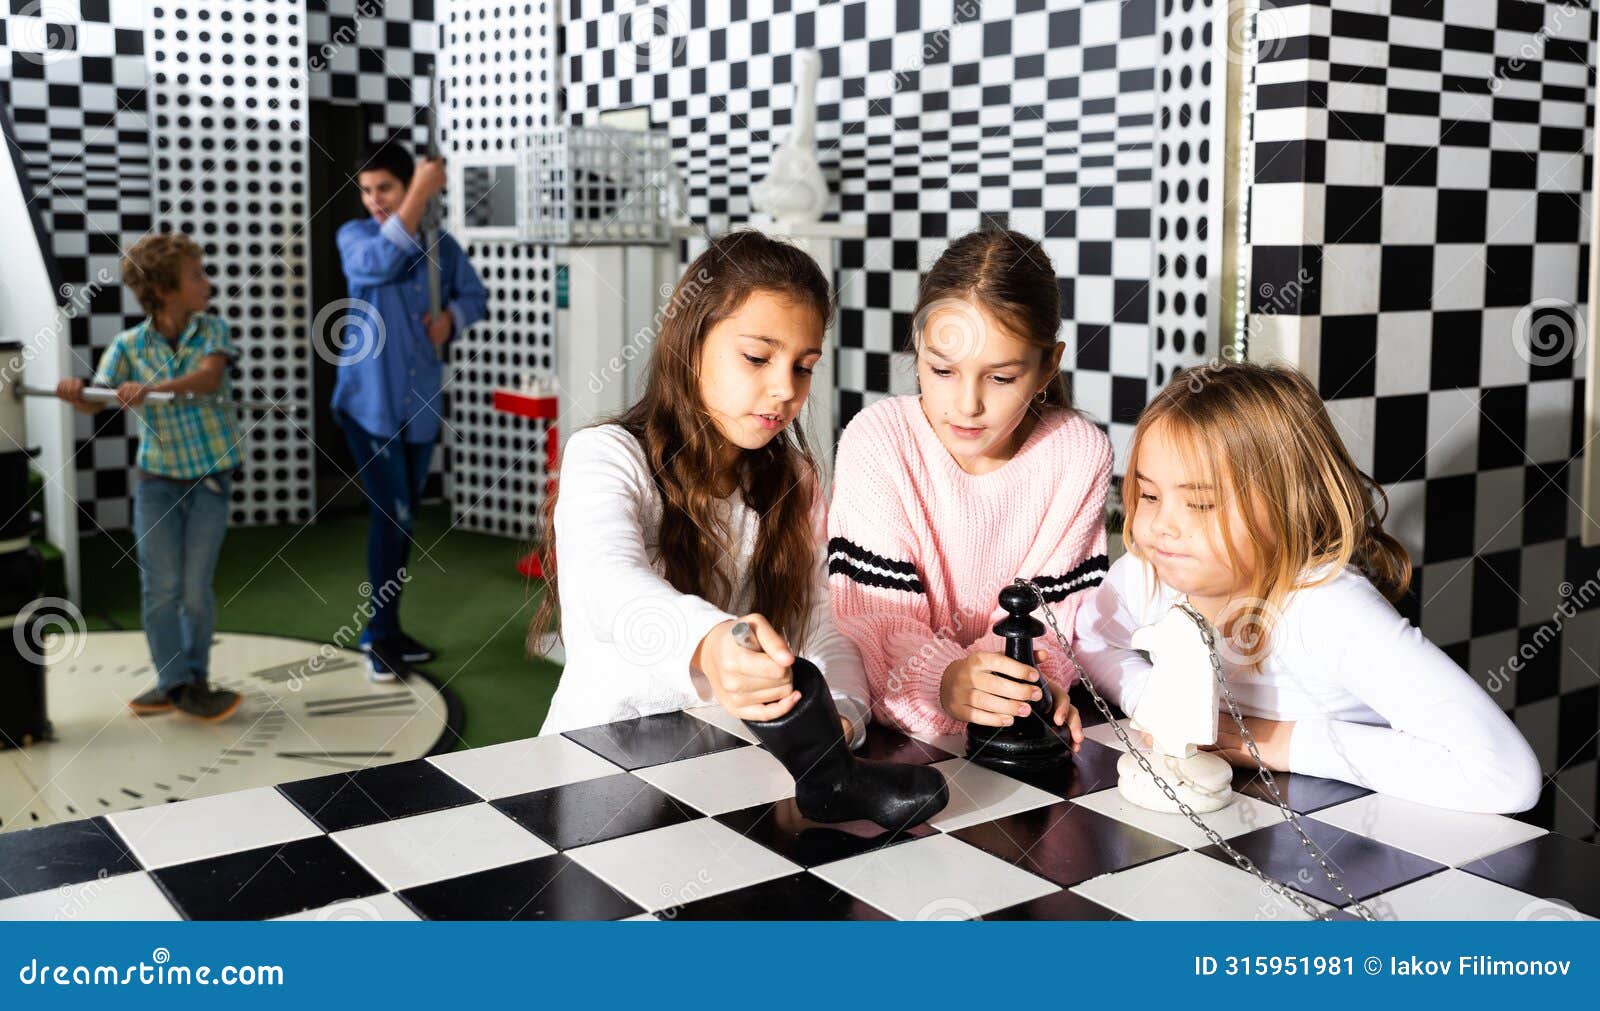 tween girls solving conundrum in quest room stylized under chessboard